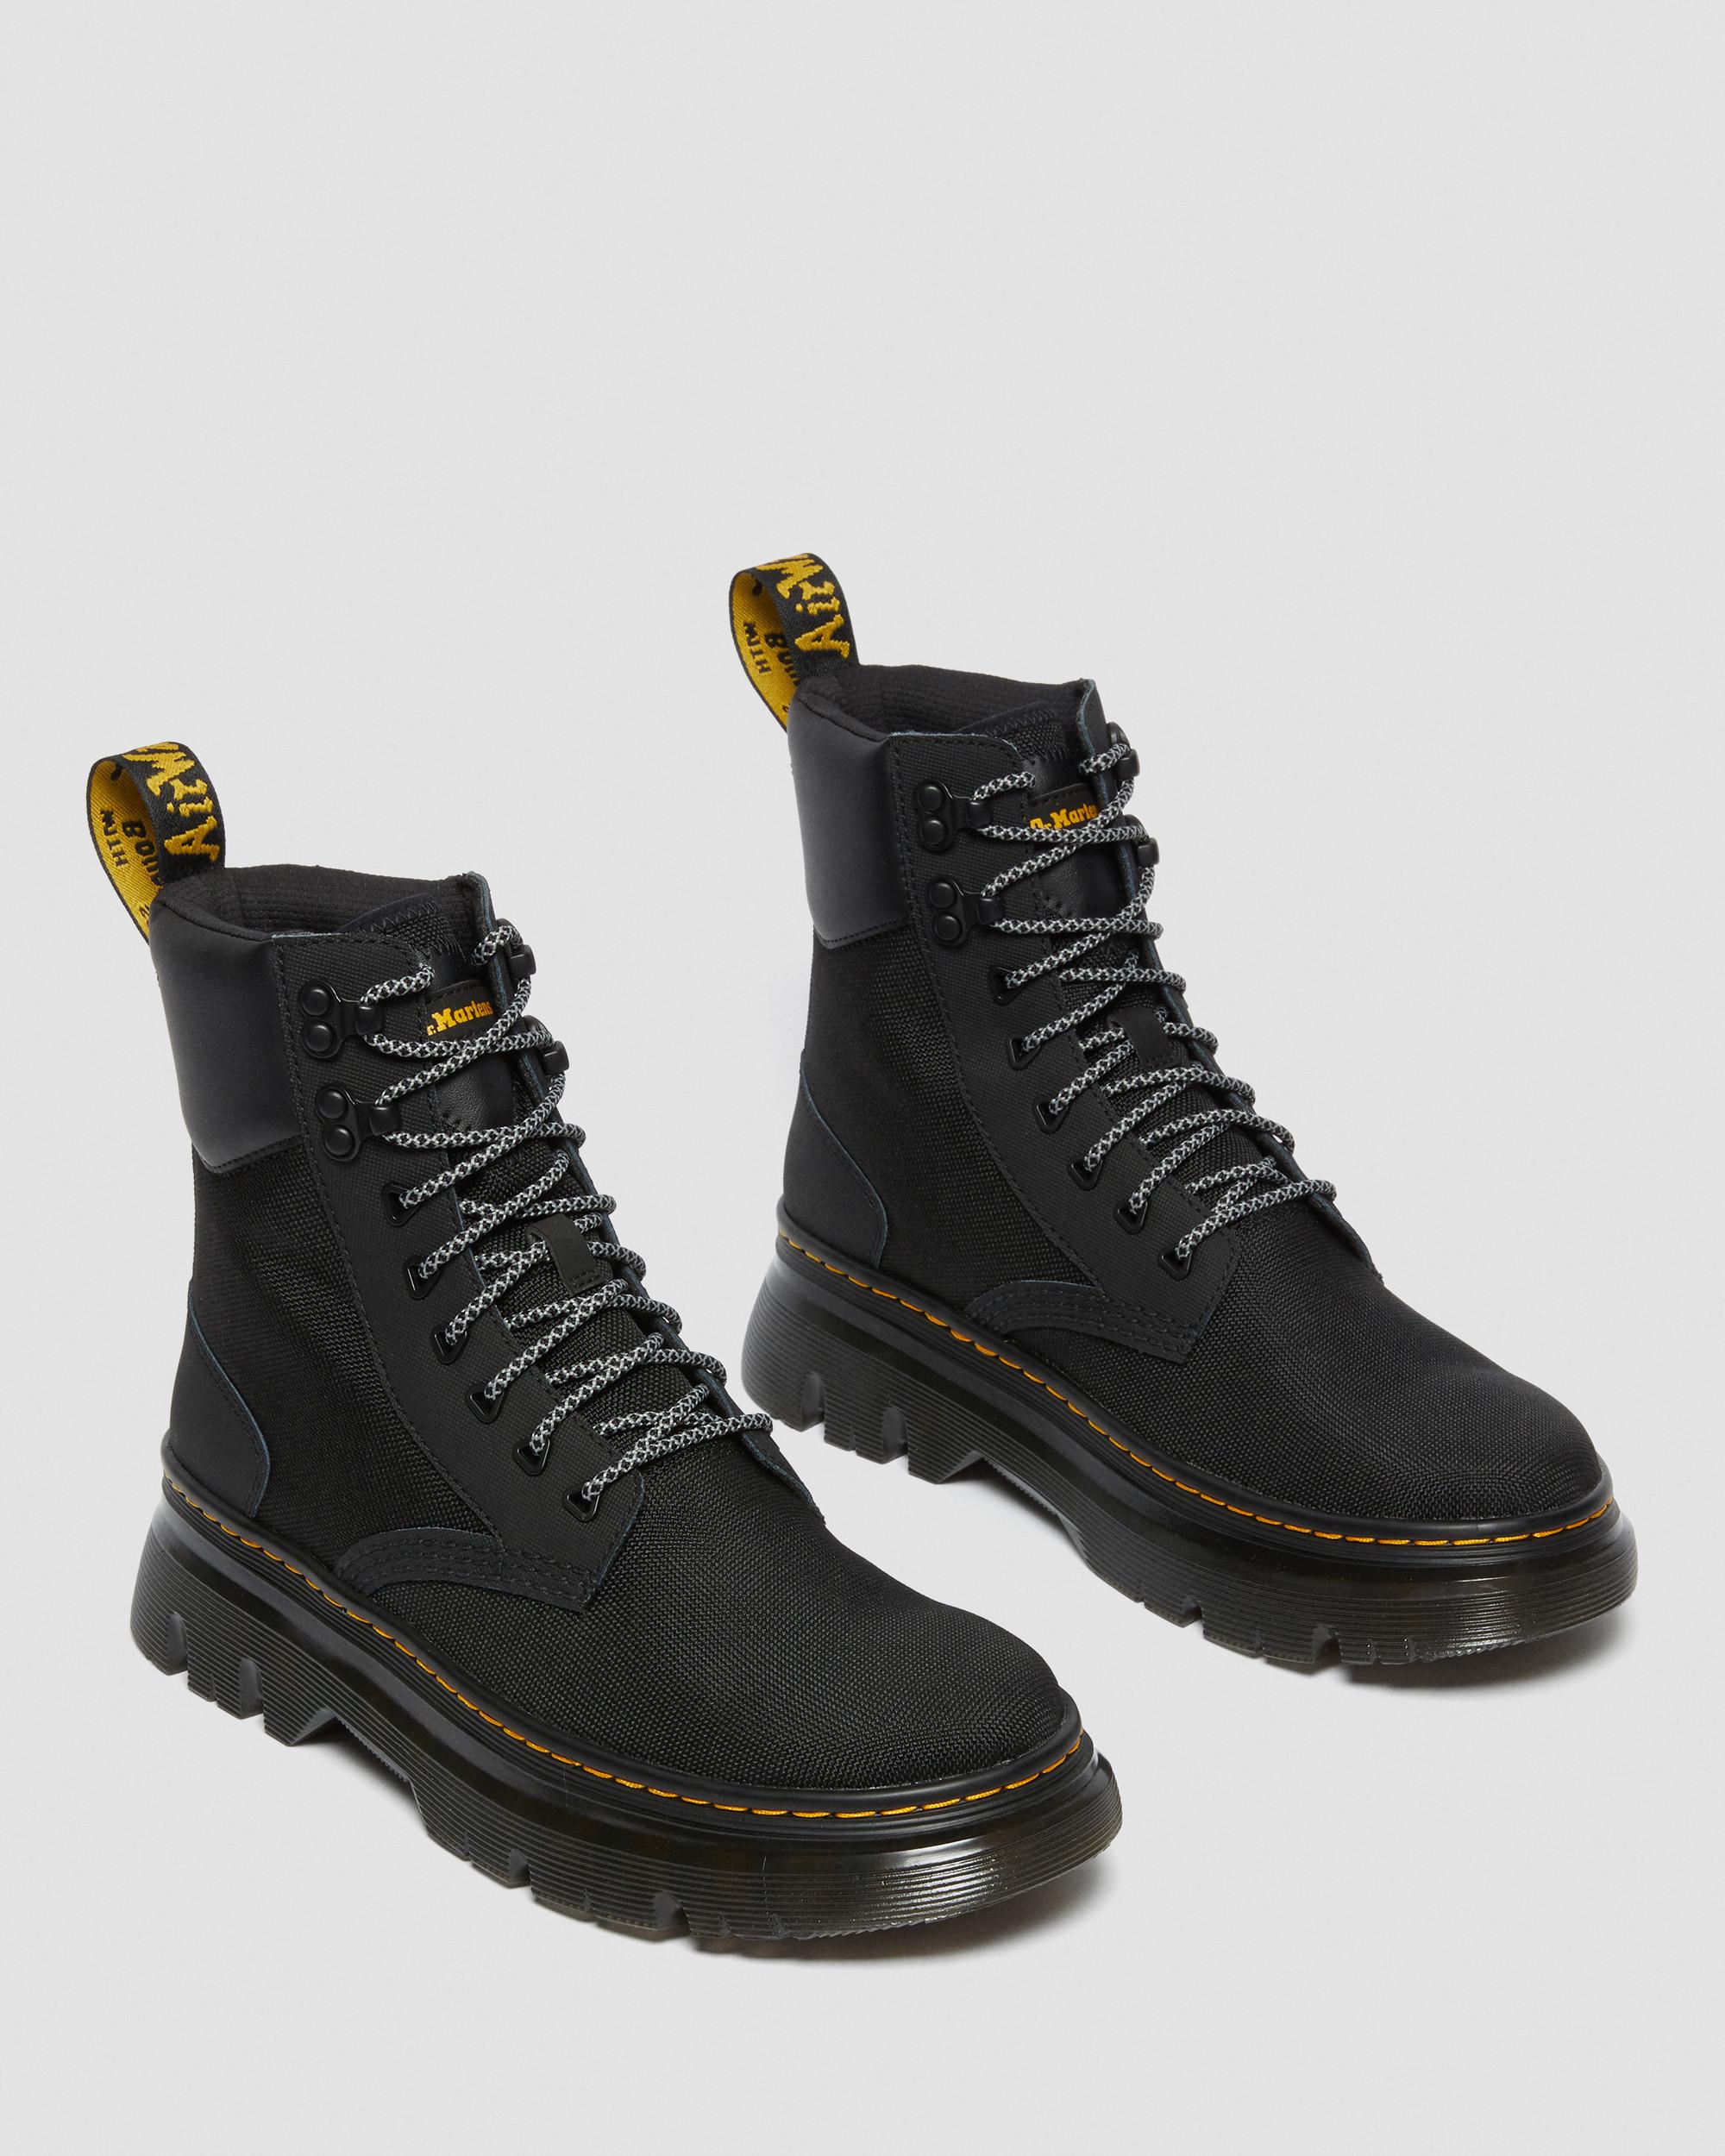 Tarik Utility Boots, Black | Dr. Martens